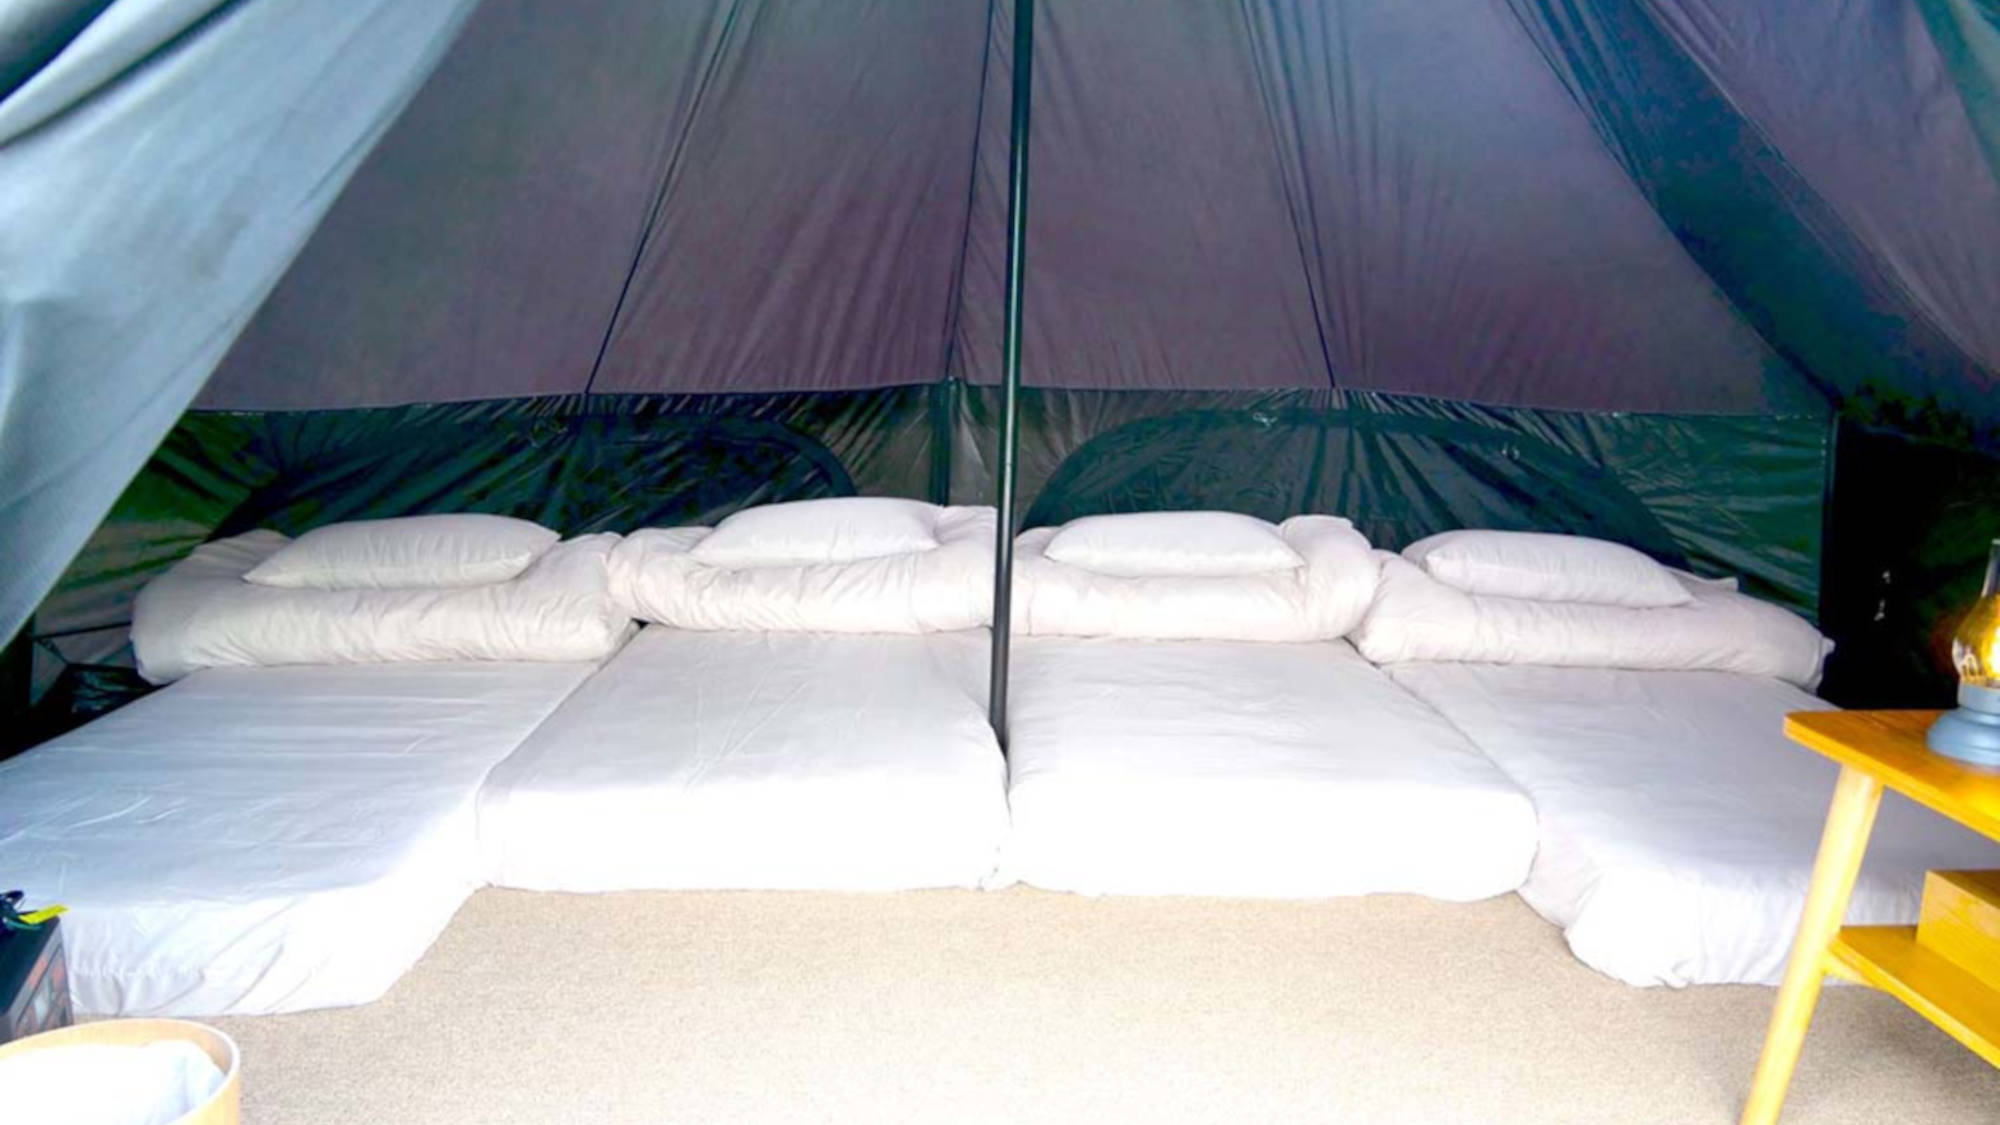 ・【LINキャンプくつろぎ】ベッドが4つある大きなテントでお手軽にぷちグランピング♪